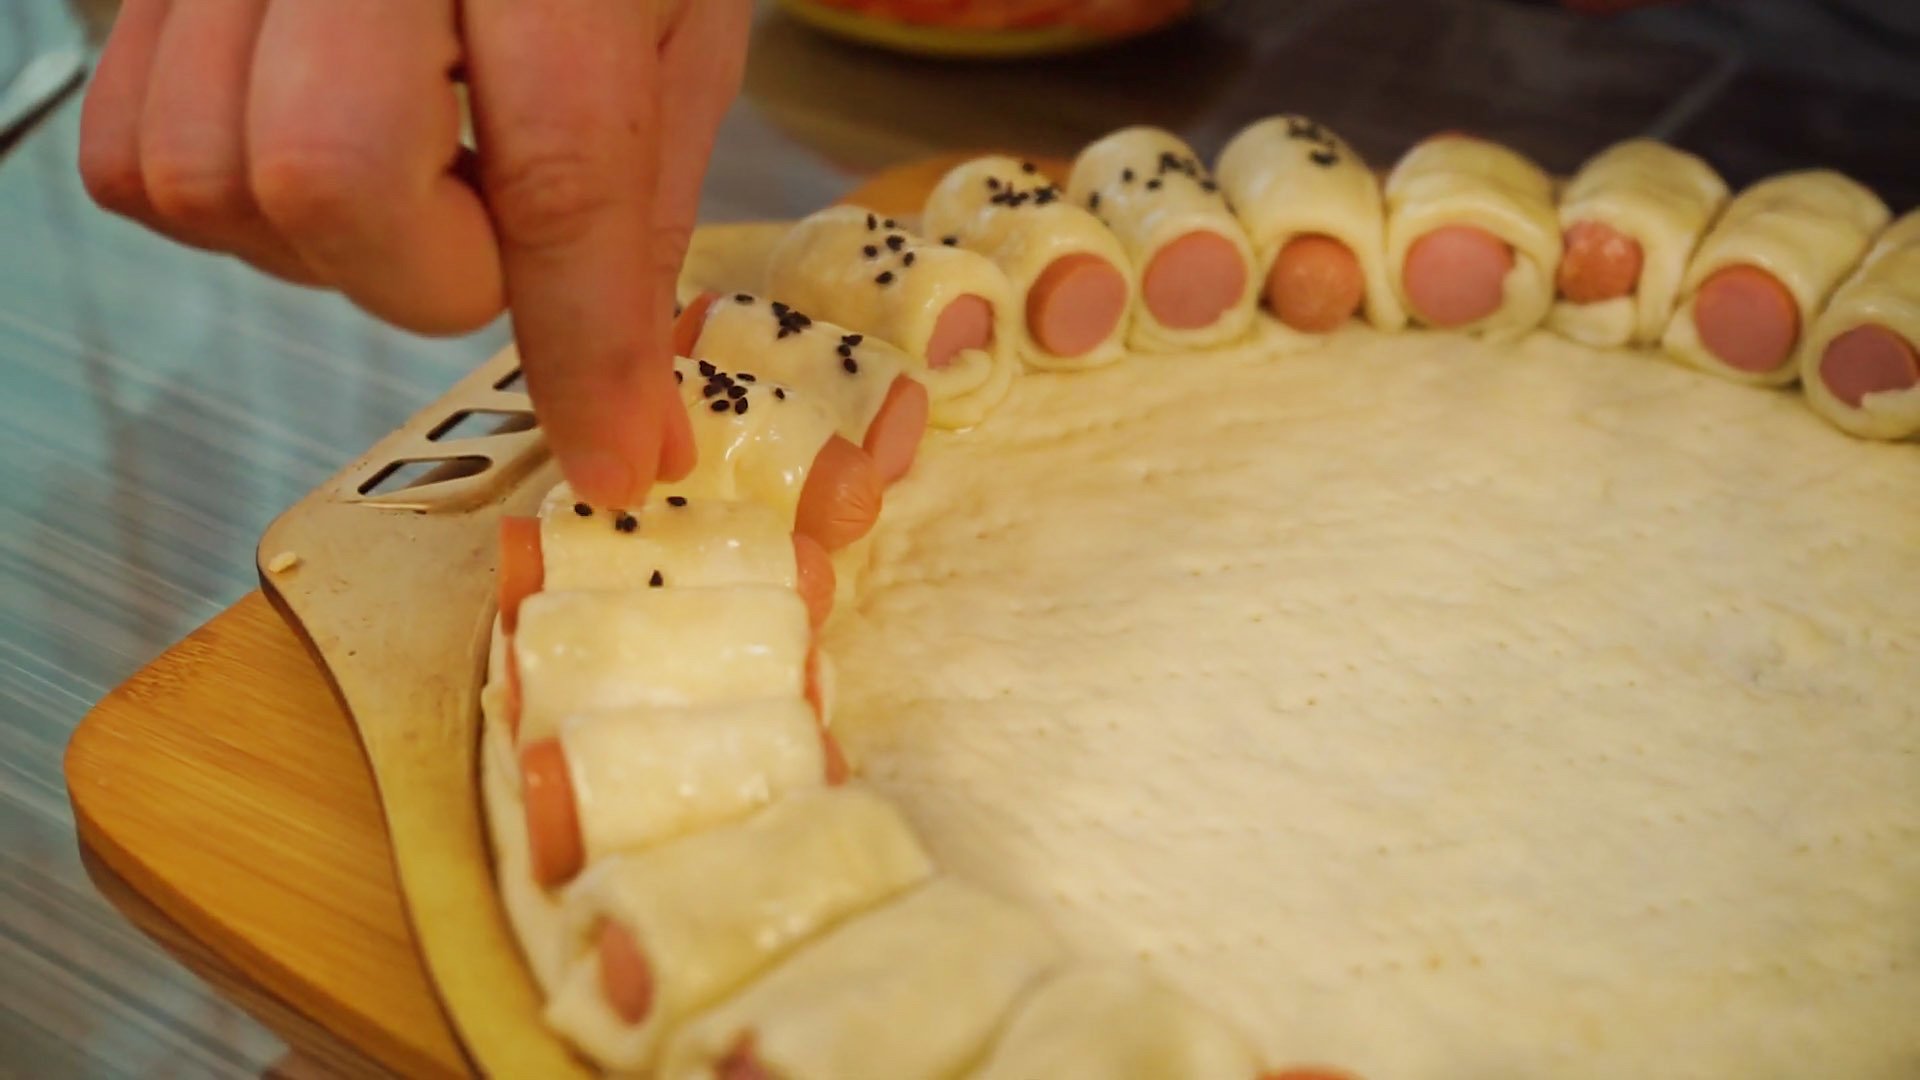 Слоеное тесто с сыром камамбер